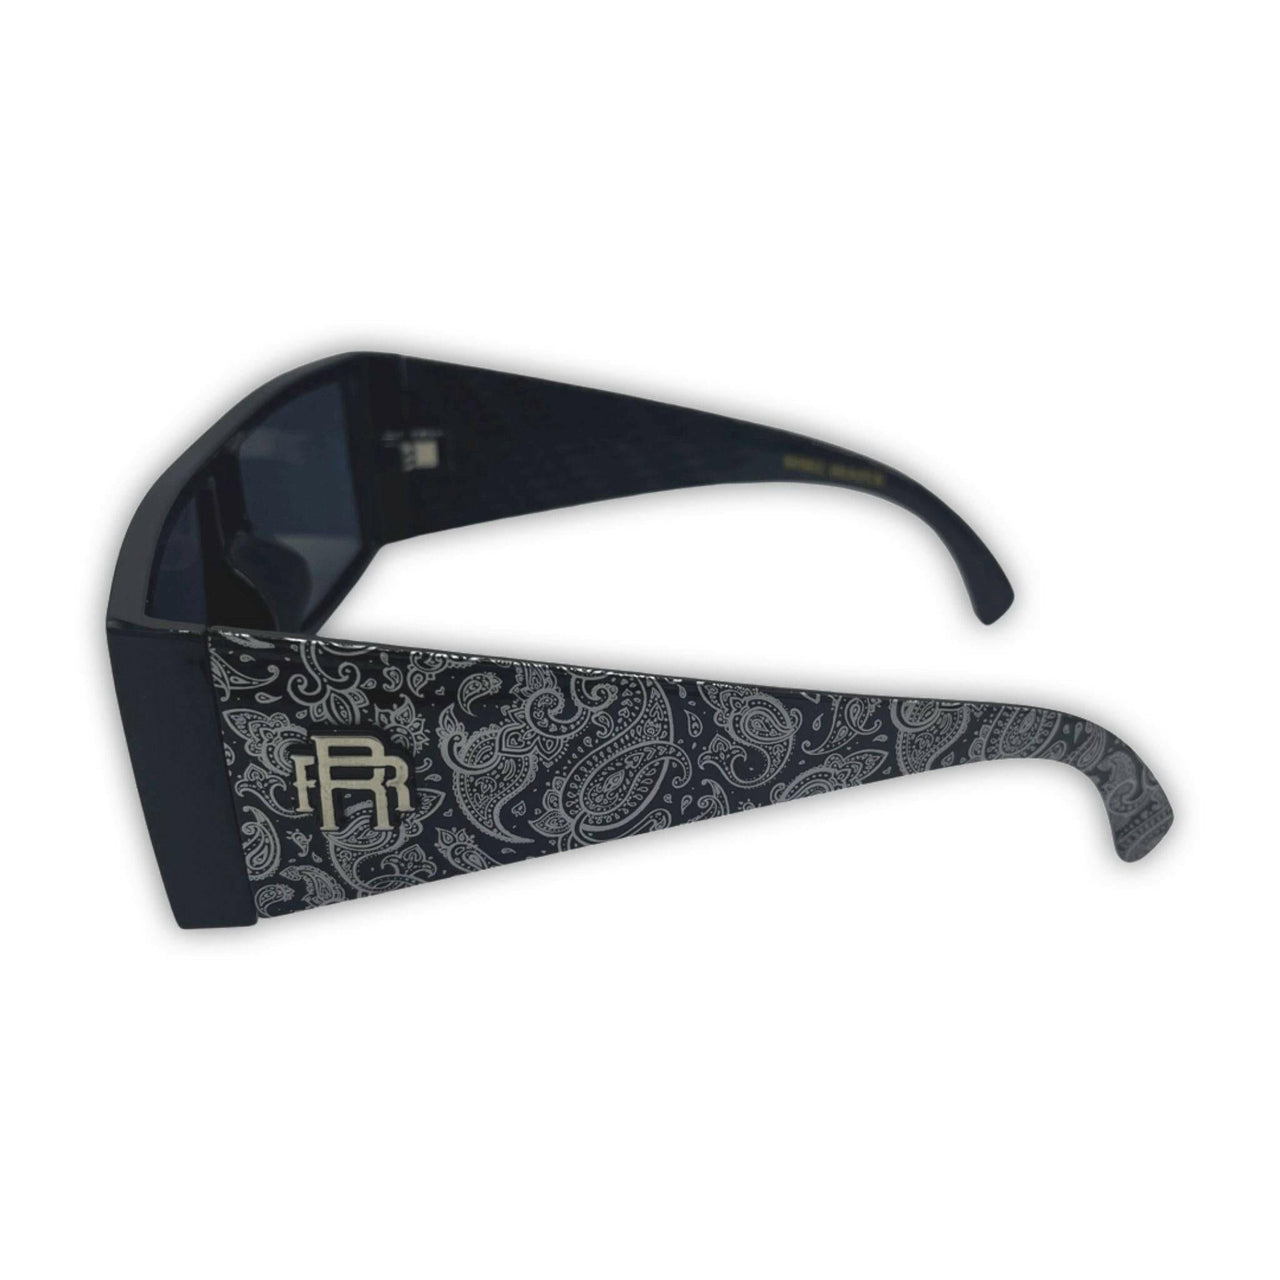 Dana Black Bandana Sunglasses - Rebel Reaper Clothing CompanySunglasses